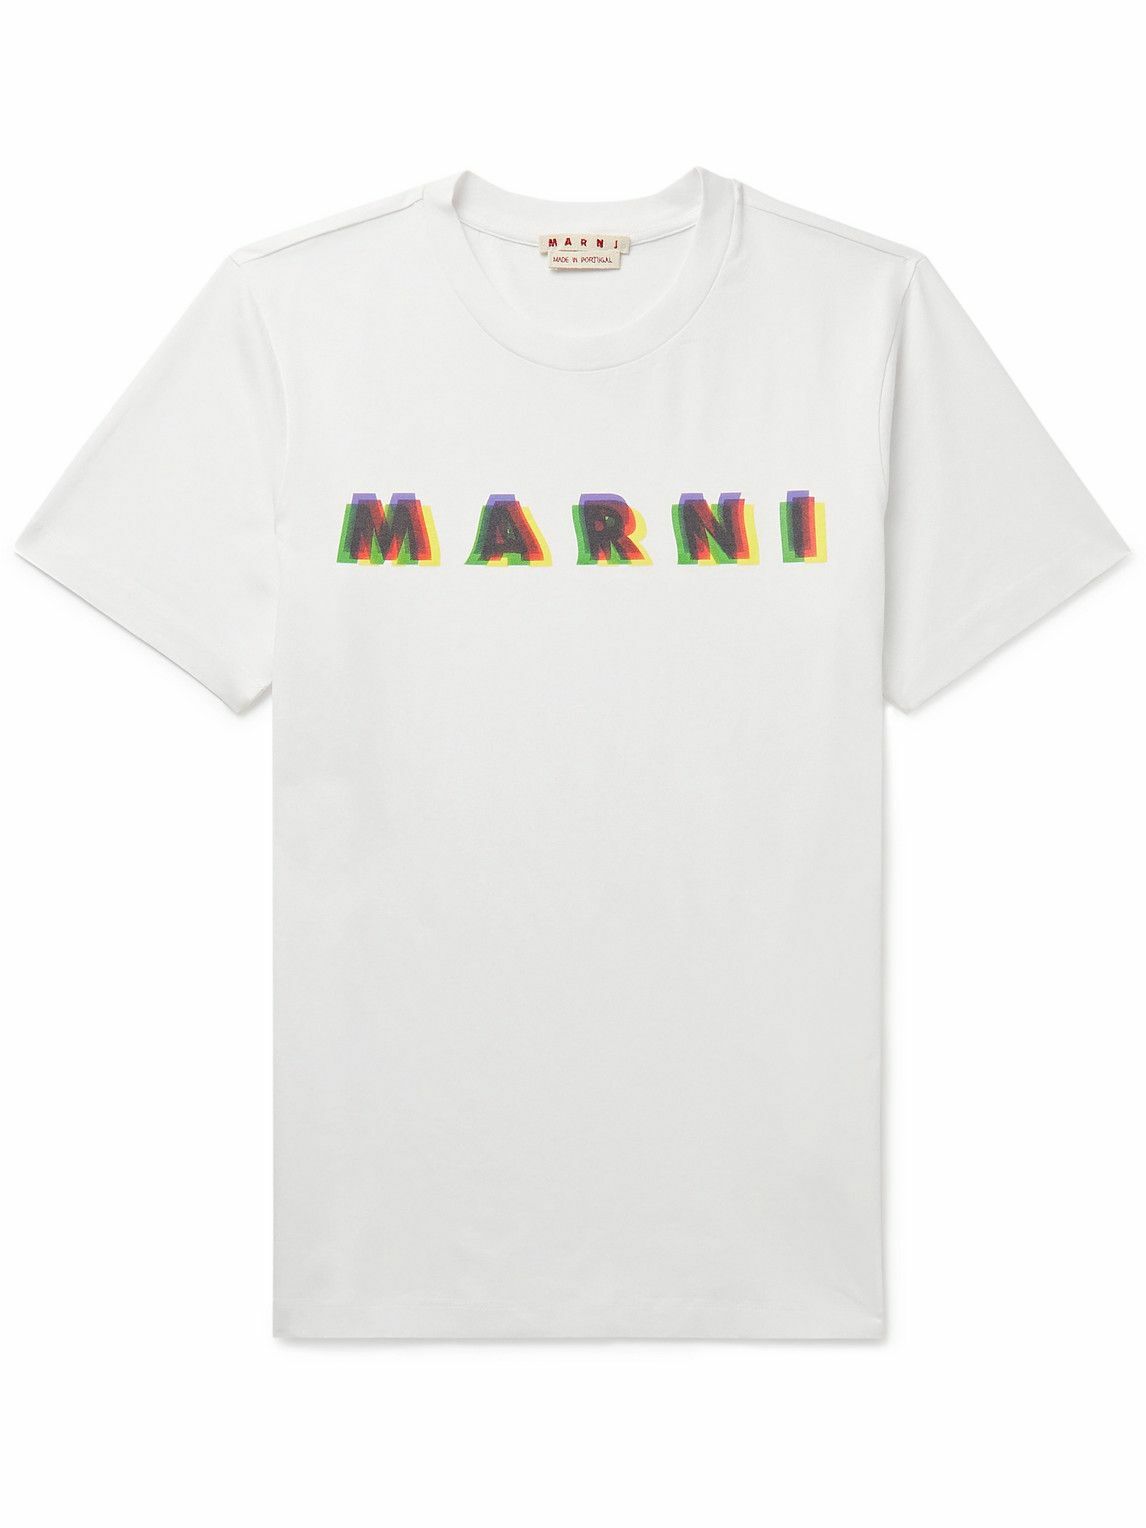 Marni - Logo-Print Cotton-Jersey T-Shirt - White Marni